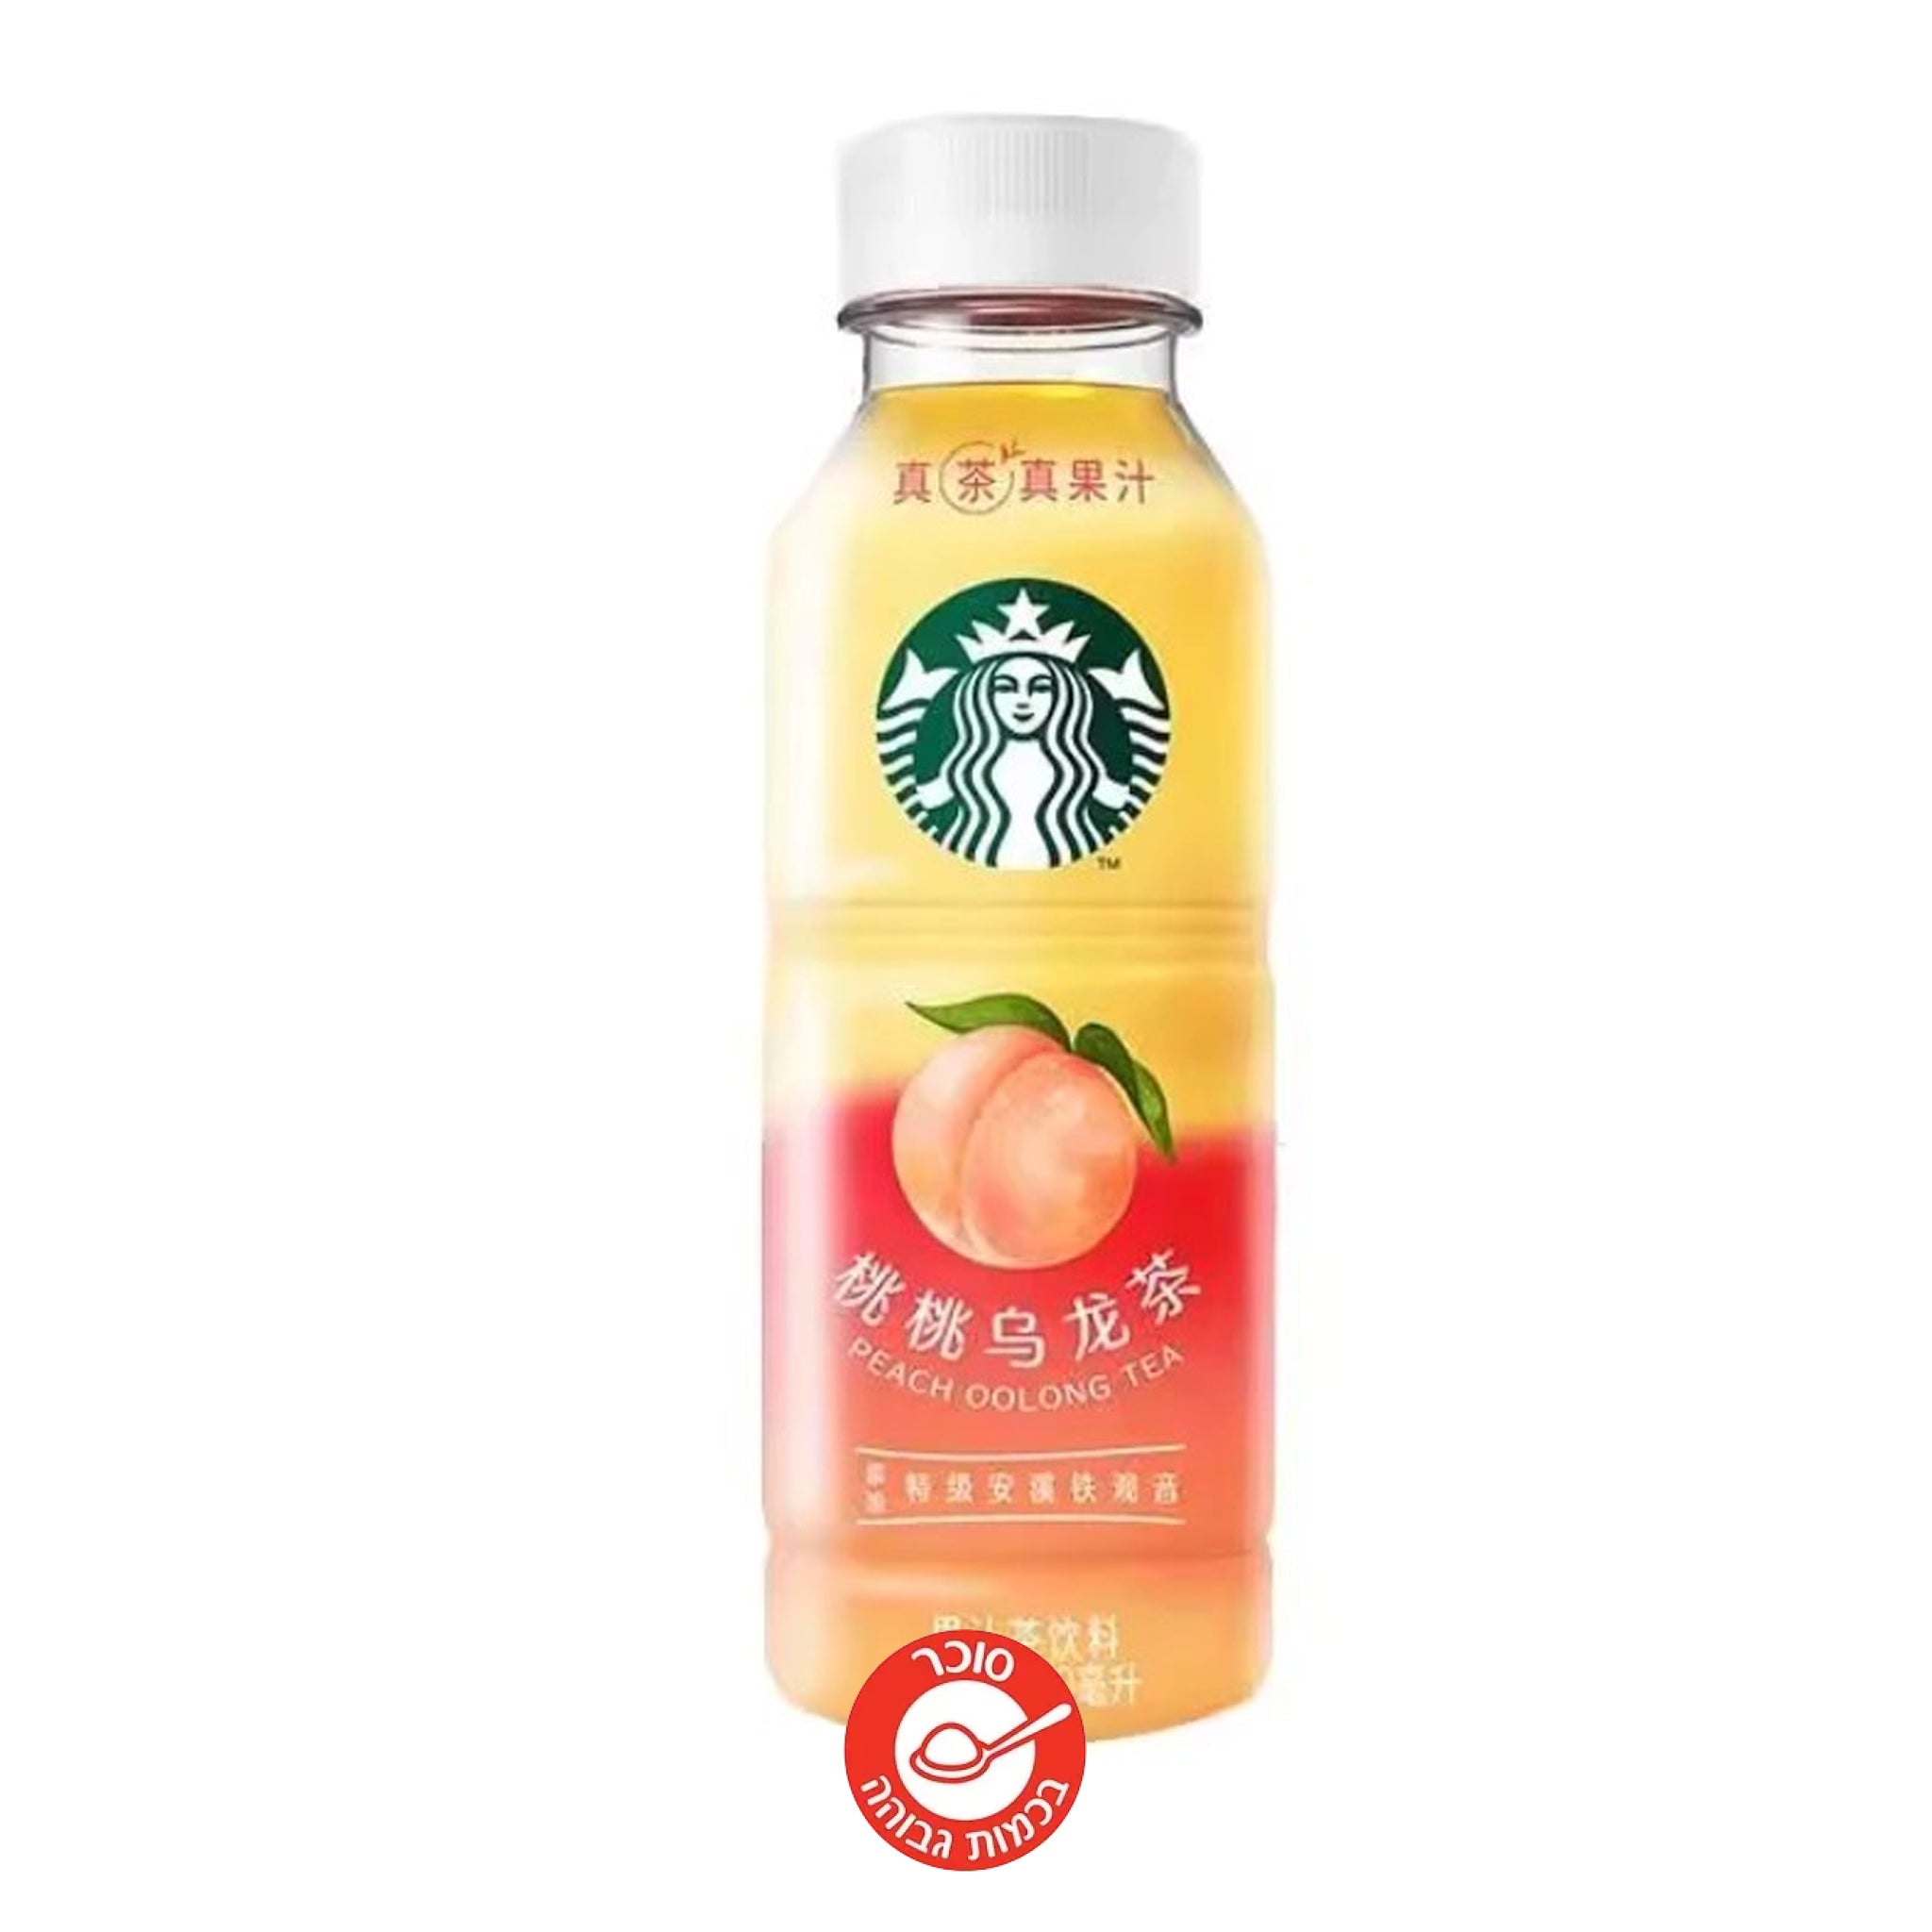 Starbucks Peach Tea תה מוכן של סטארבקס בטעם אפרסק